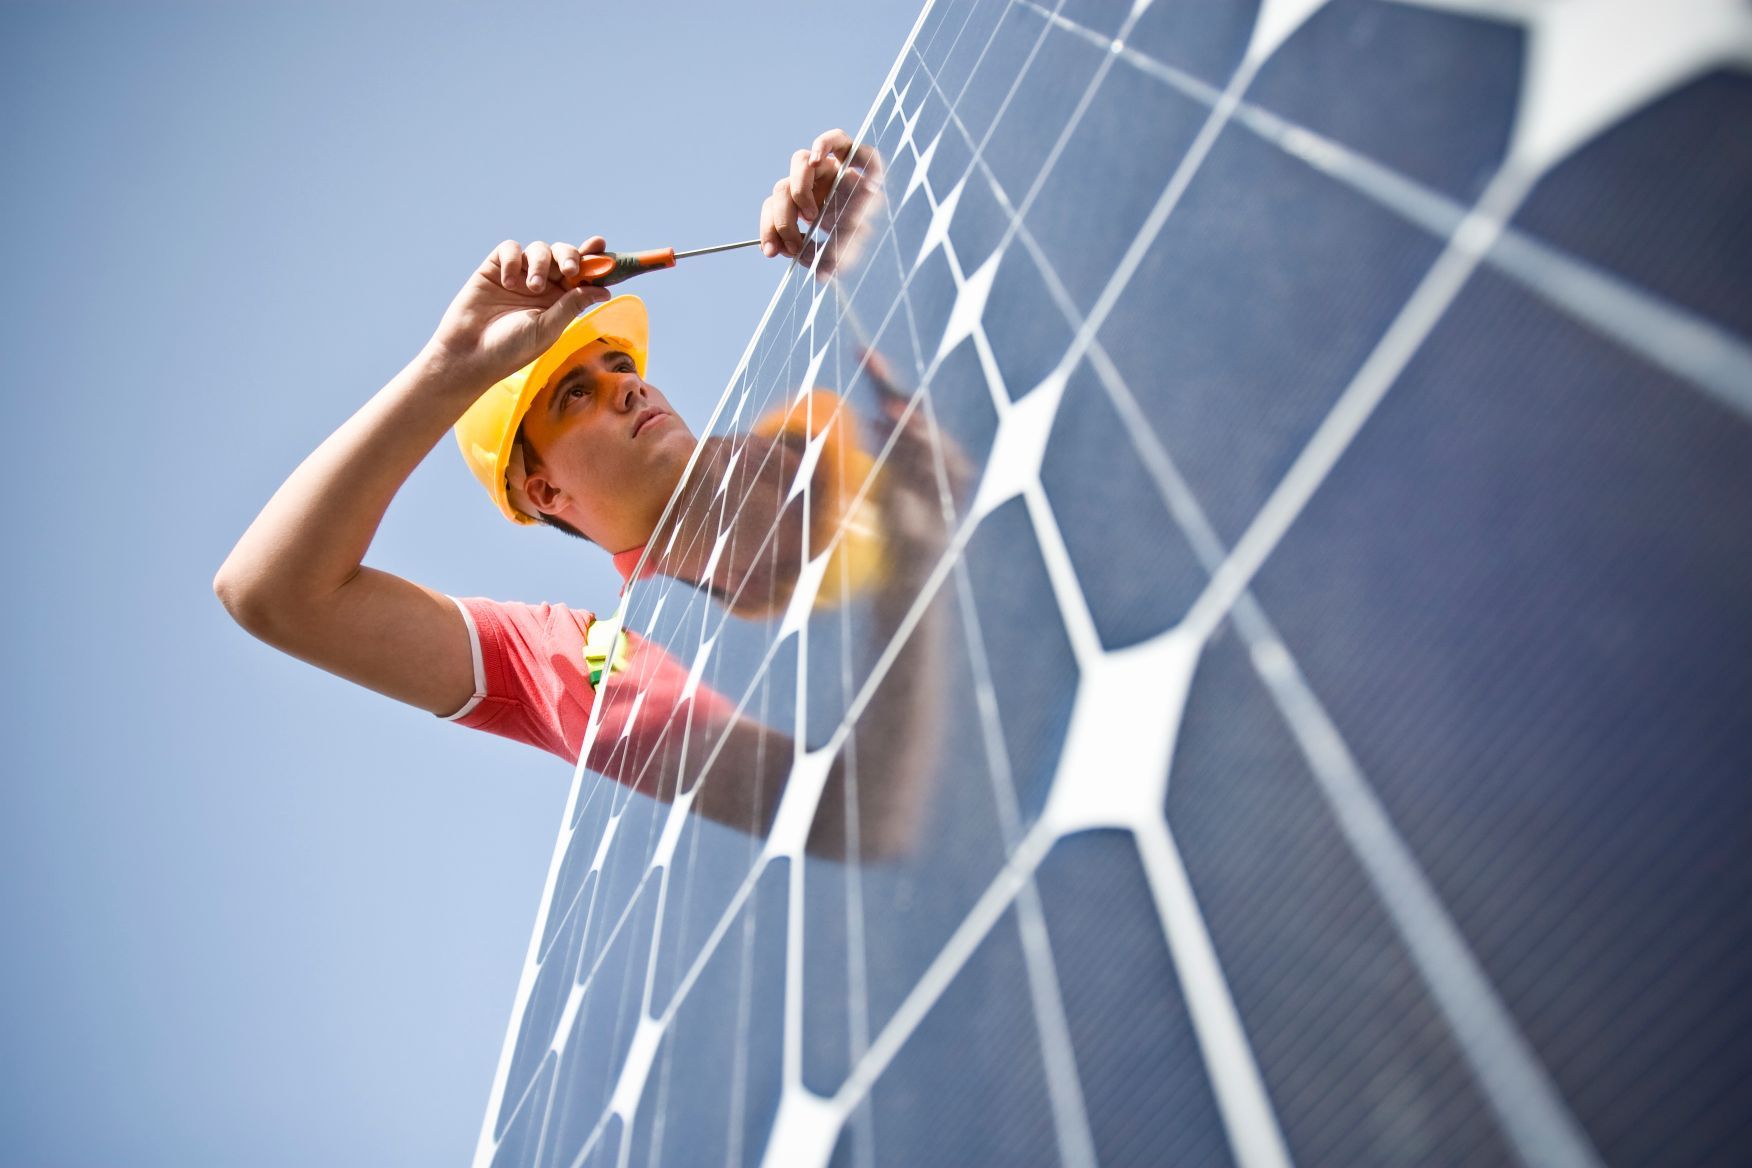 A workman installs solar panels on a building.